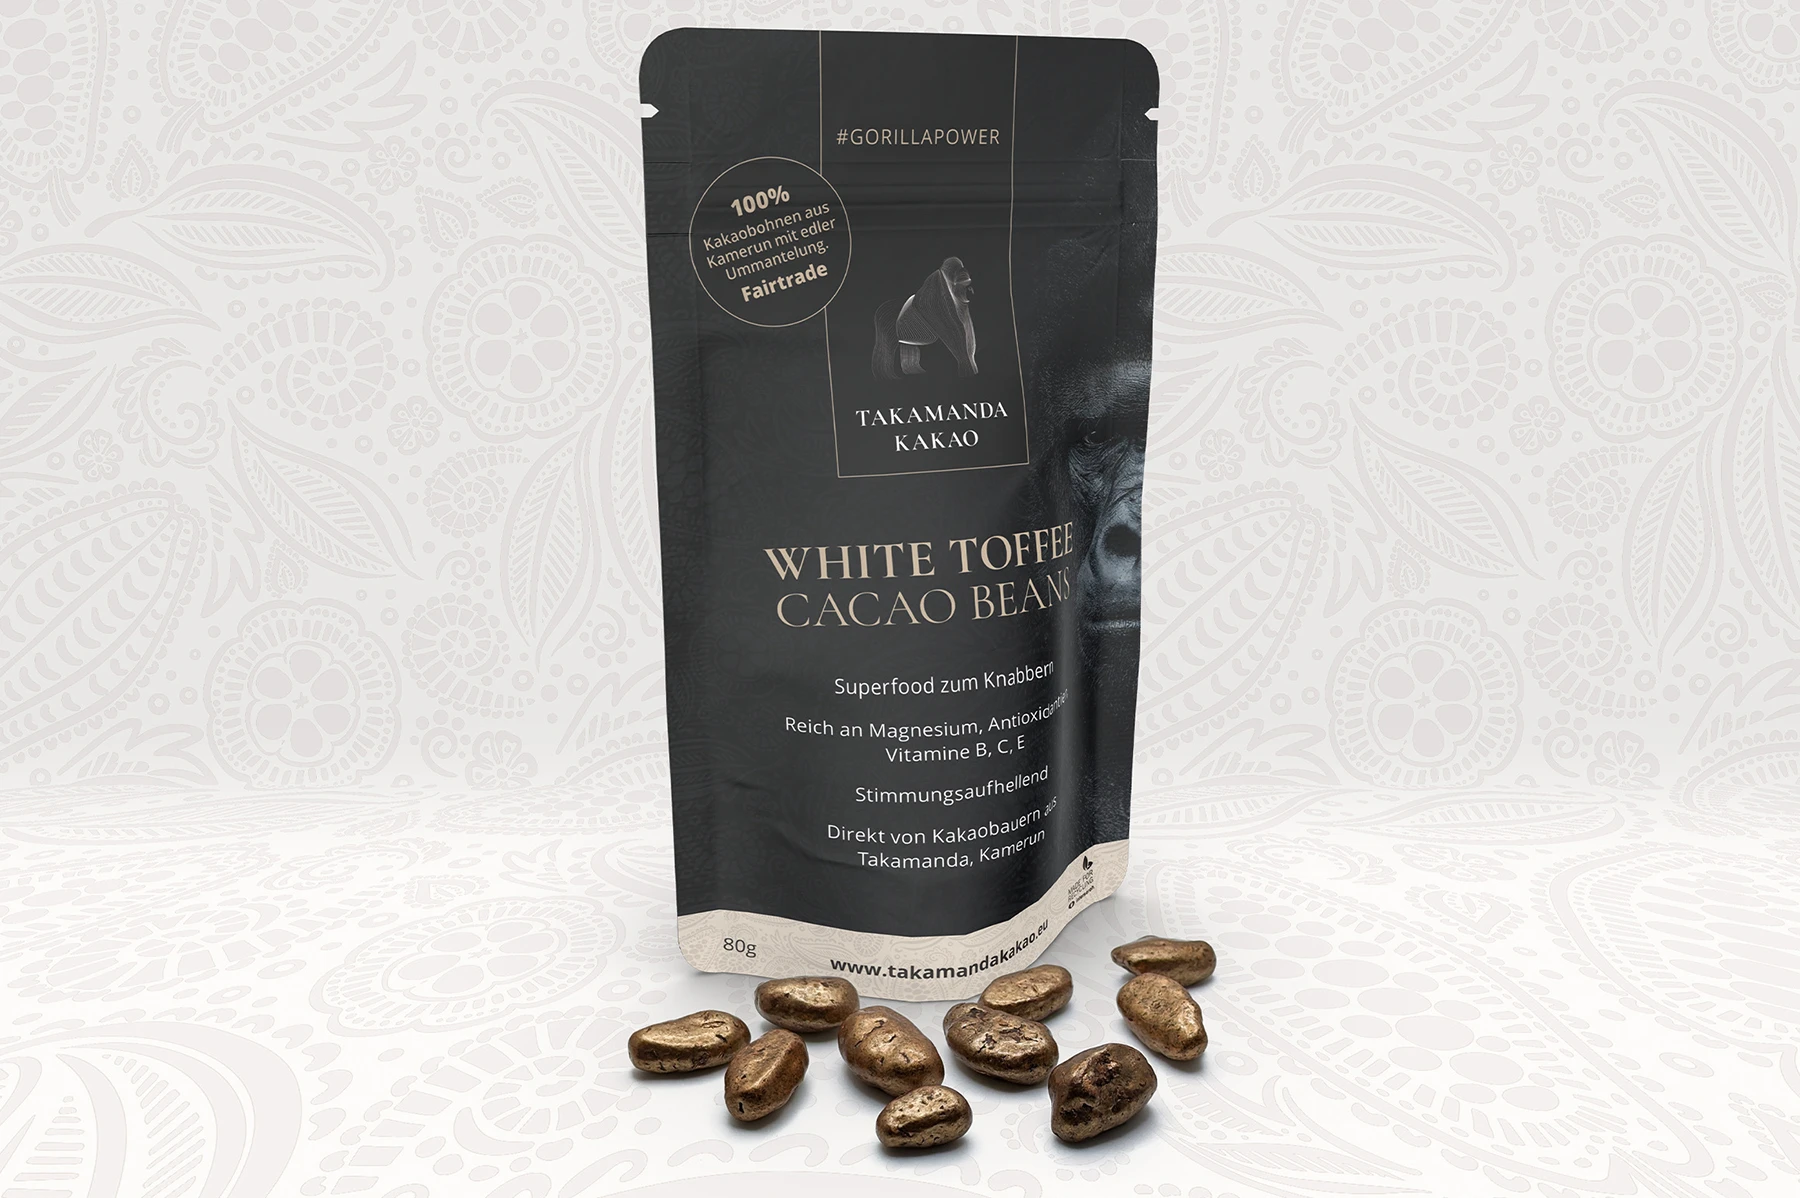 Takamanda Kakaobohnen in der Sorte White Toffee